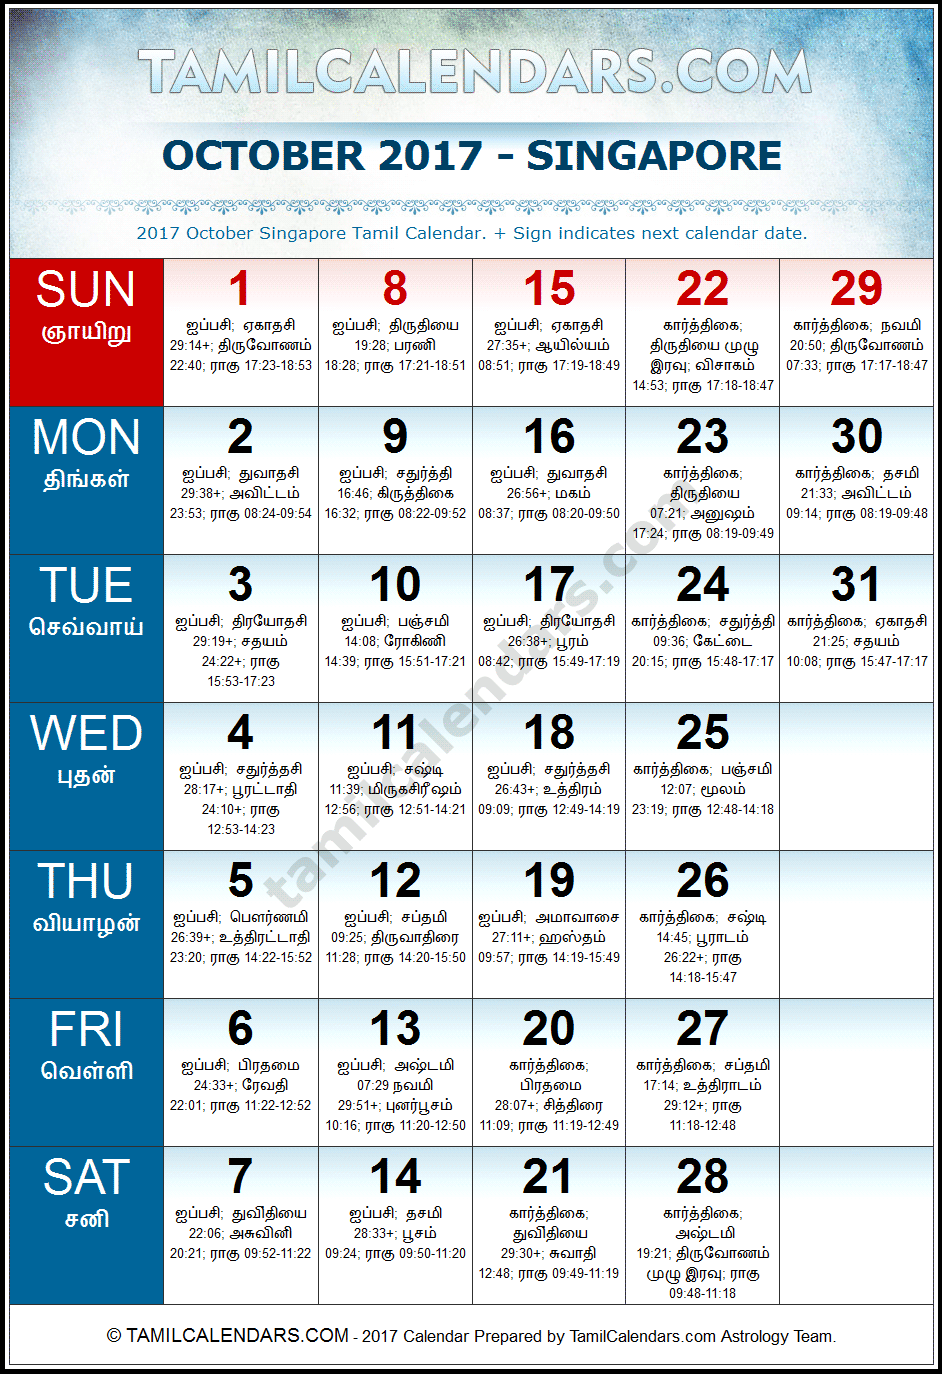 October 2017 Tamil Calendar for Singapore